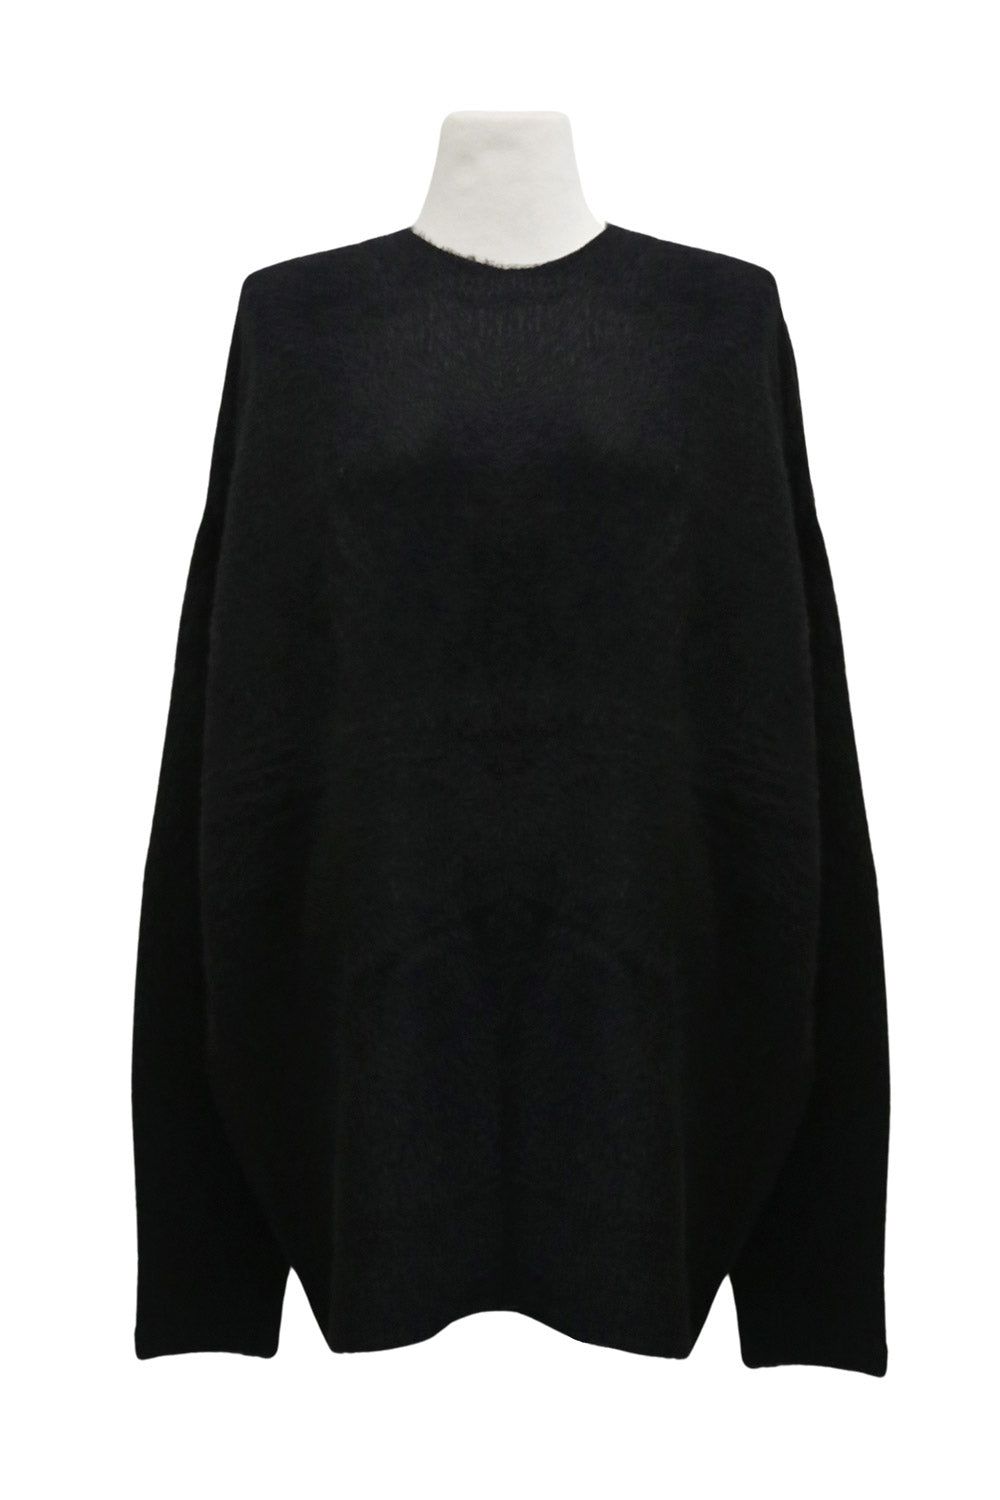 storets.com Andy Fuzzy Sweater/Dress